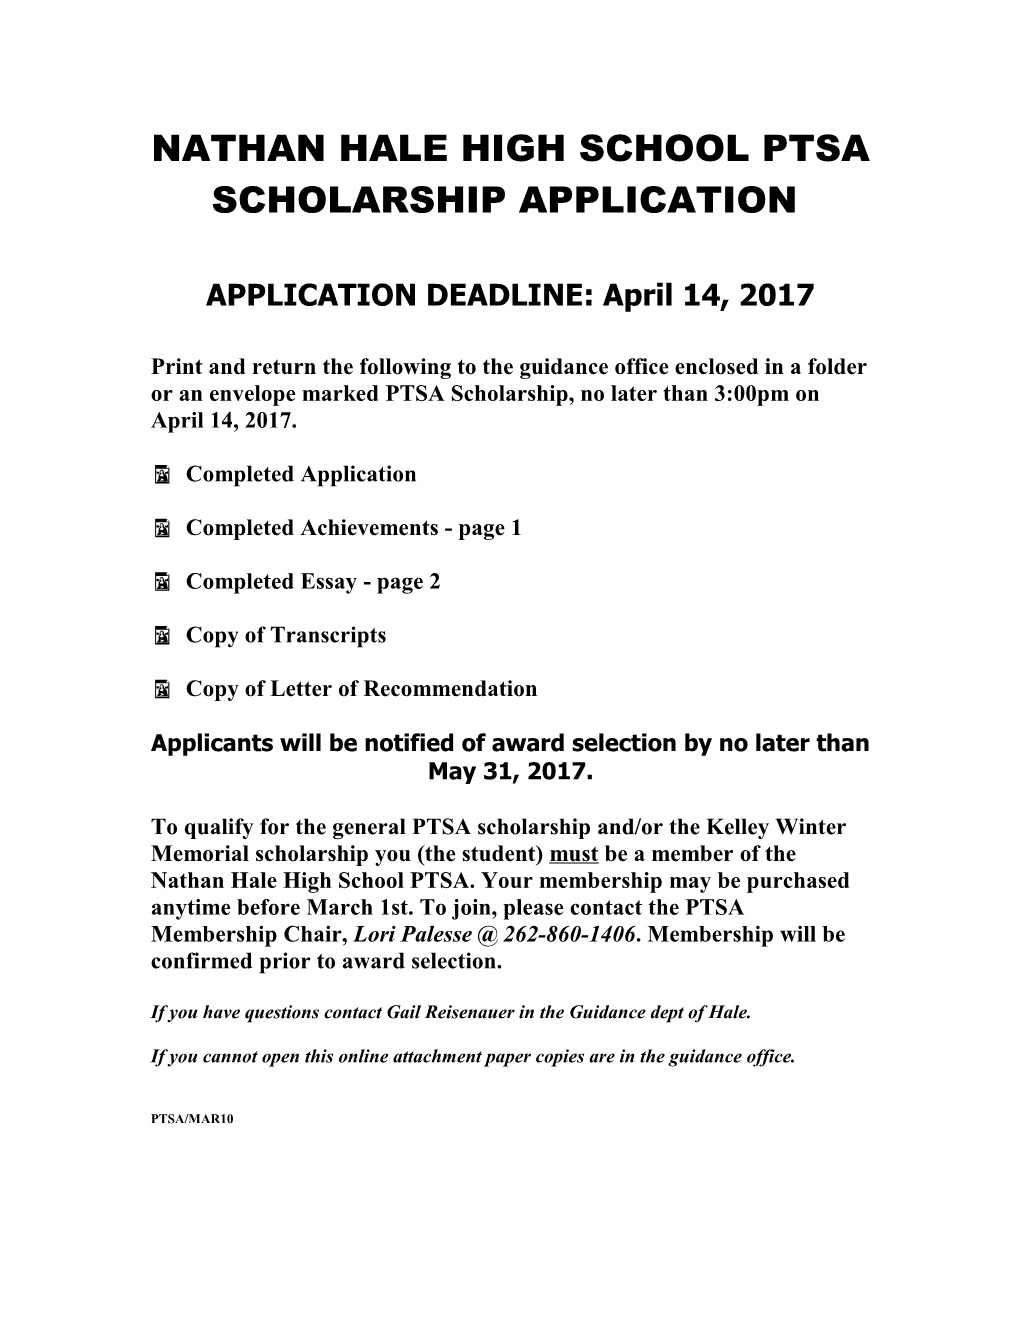 Nathan Hale High School Ptsa Scholarship Application